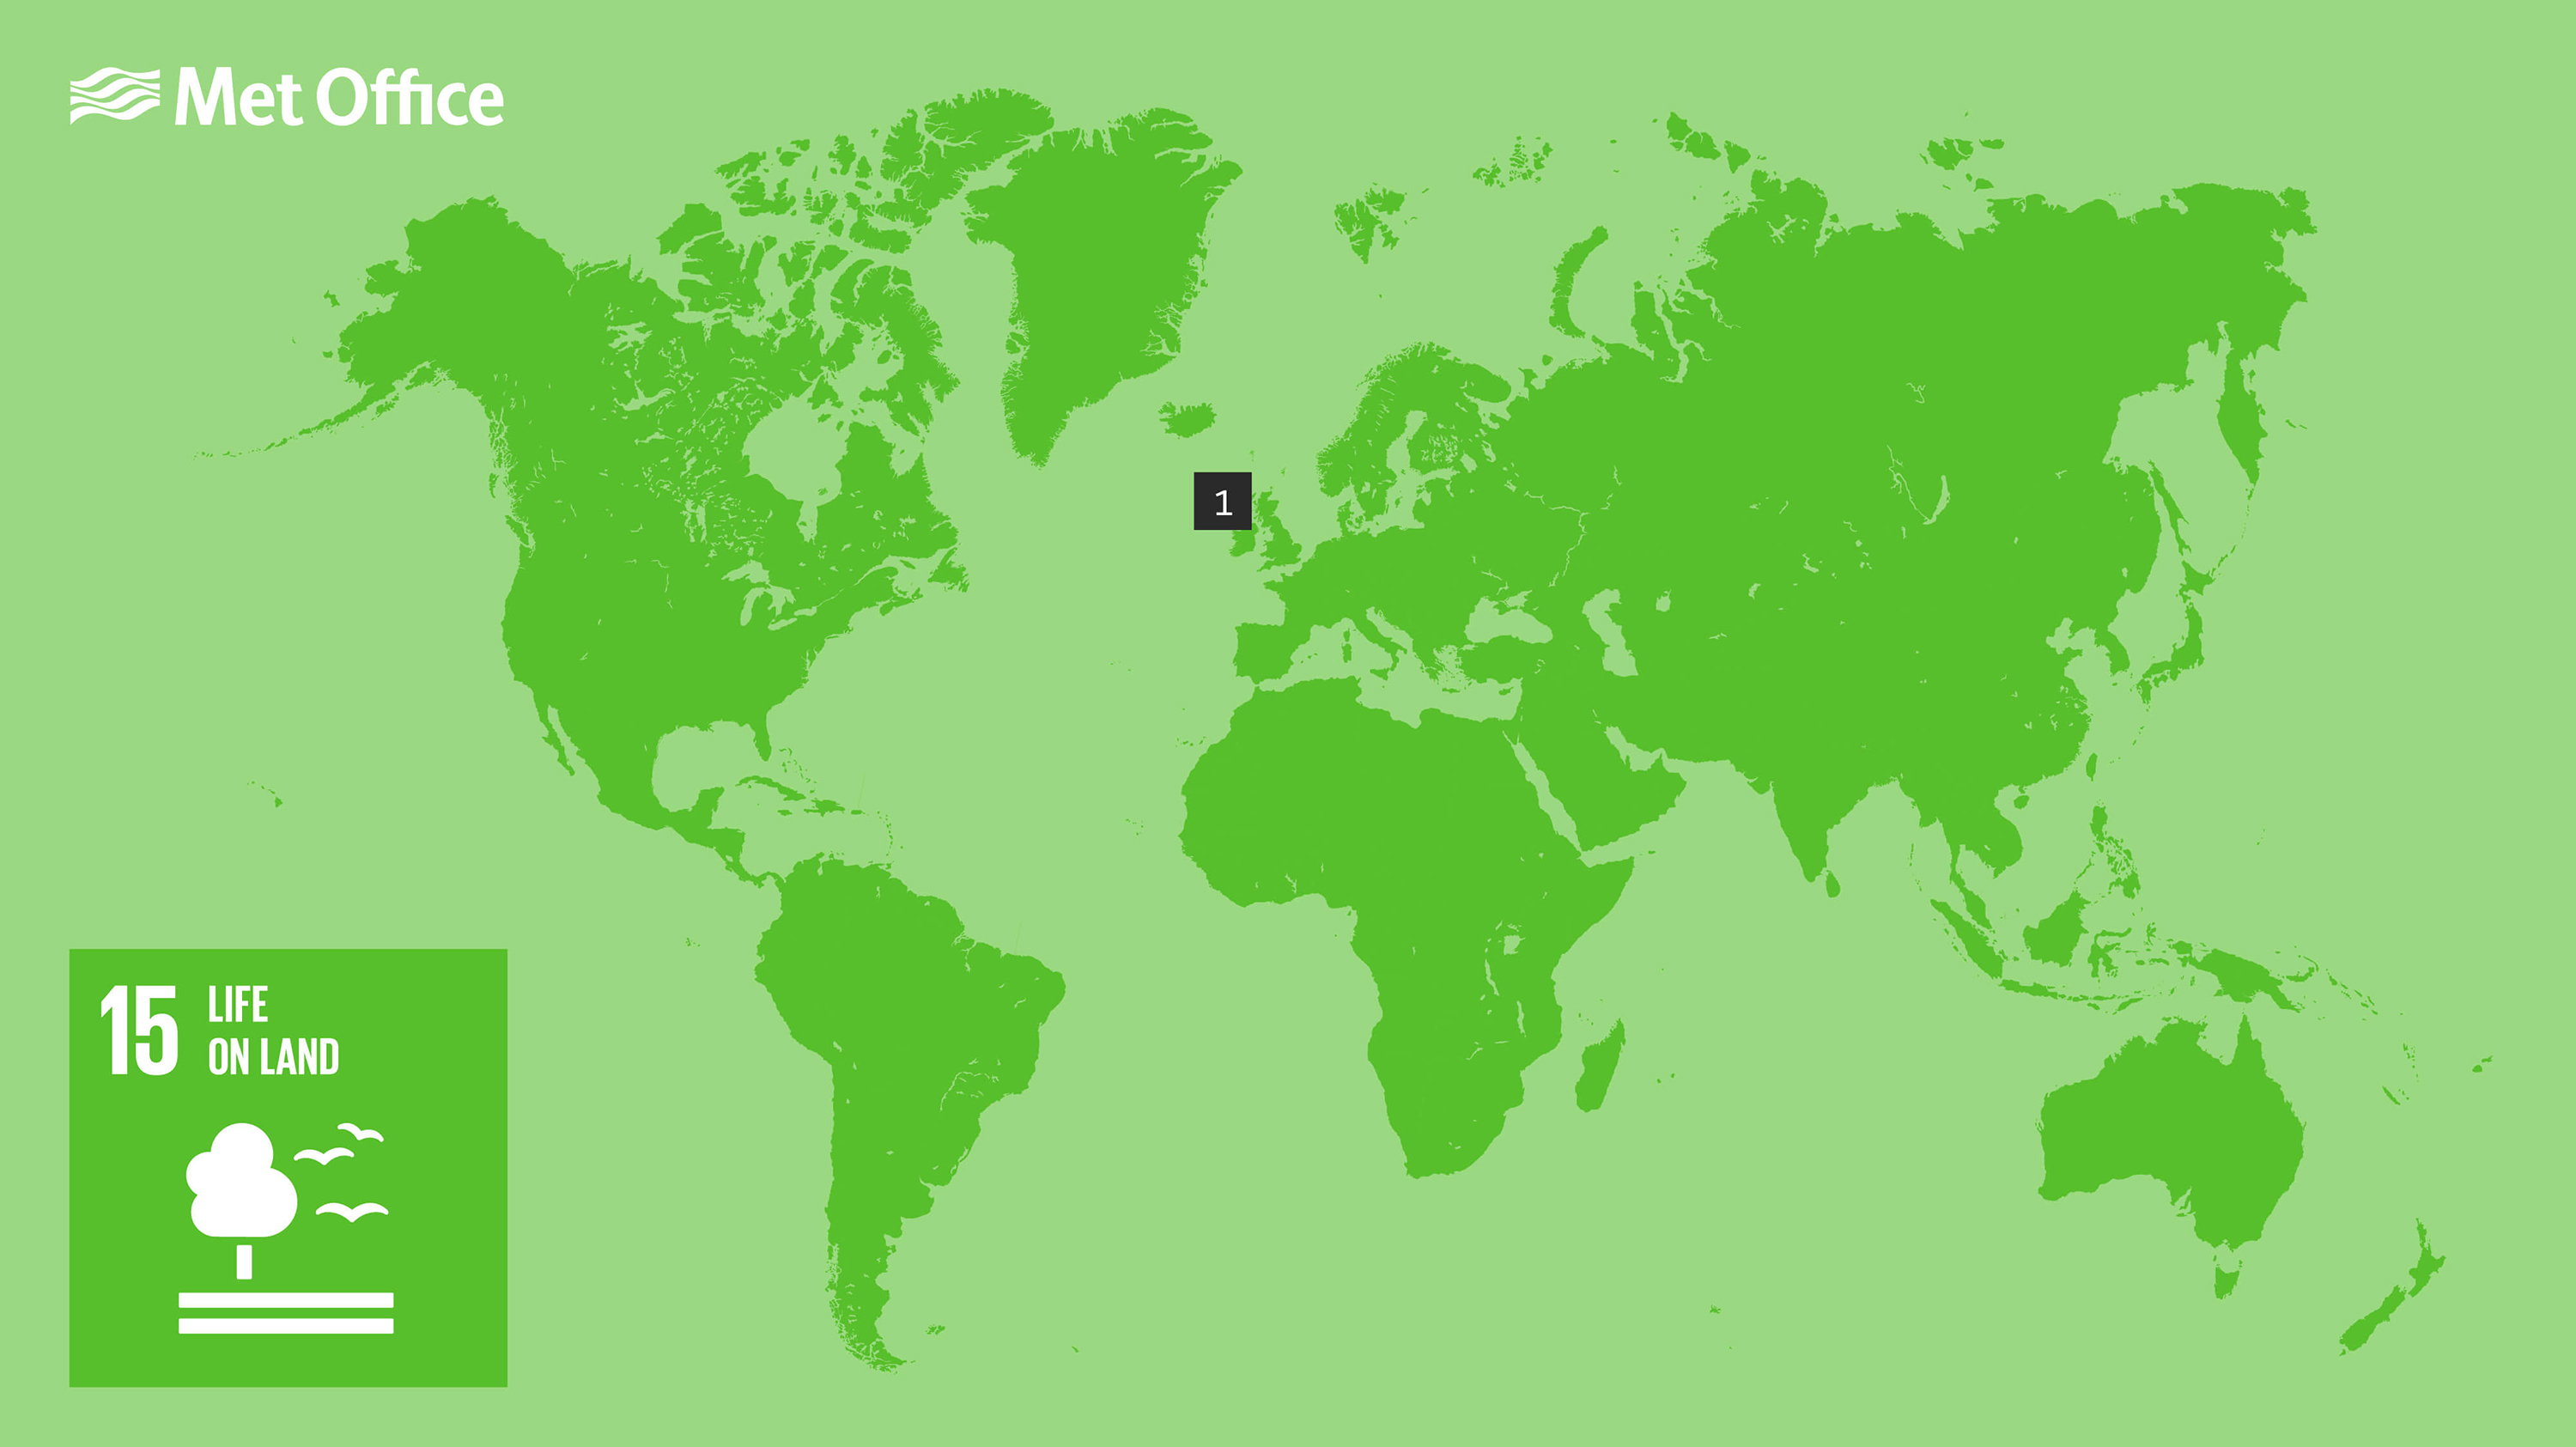 Map showing places relevant to SDG15 goal, as per the descriptions below.